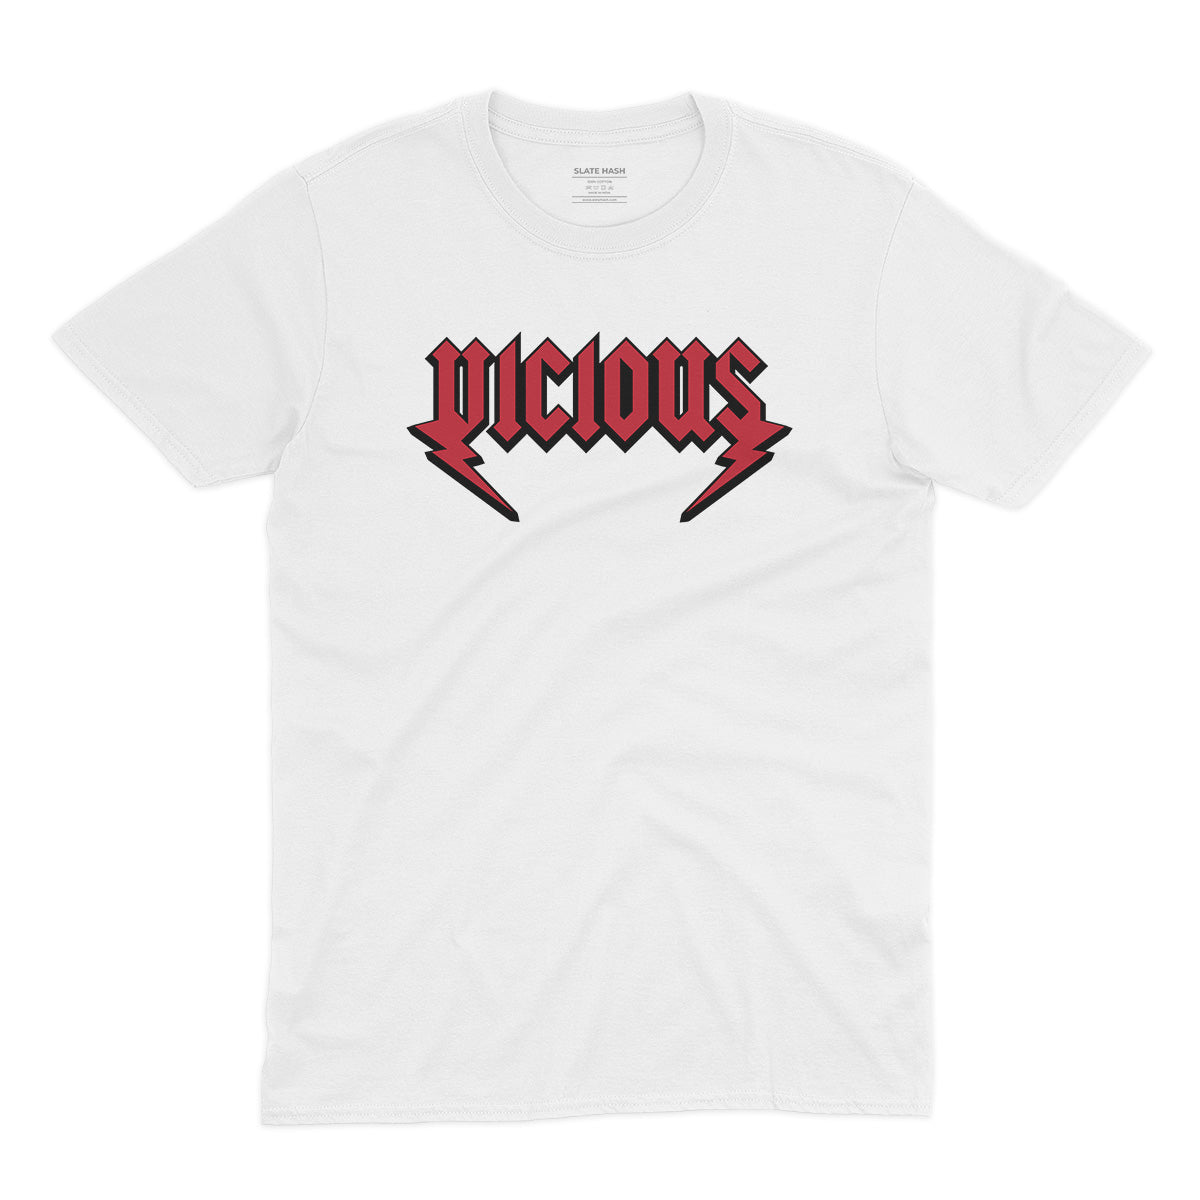 Vicious T-shirt